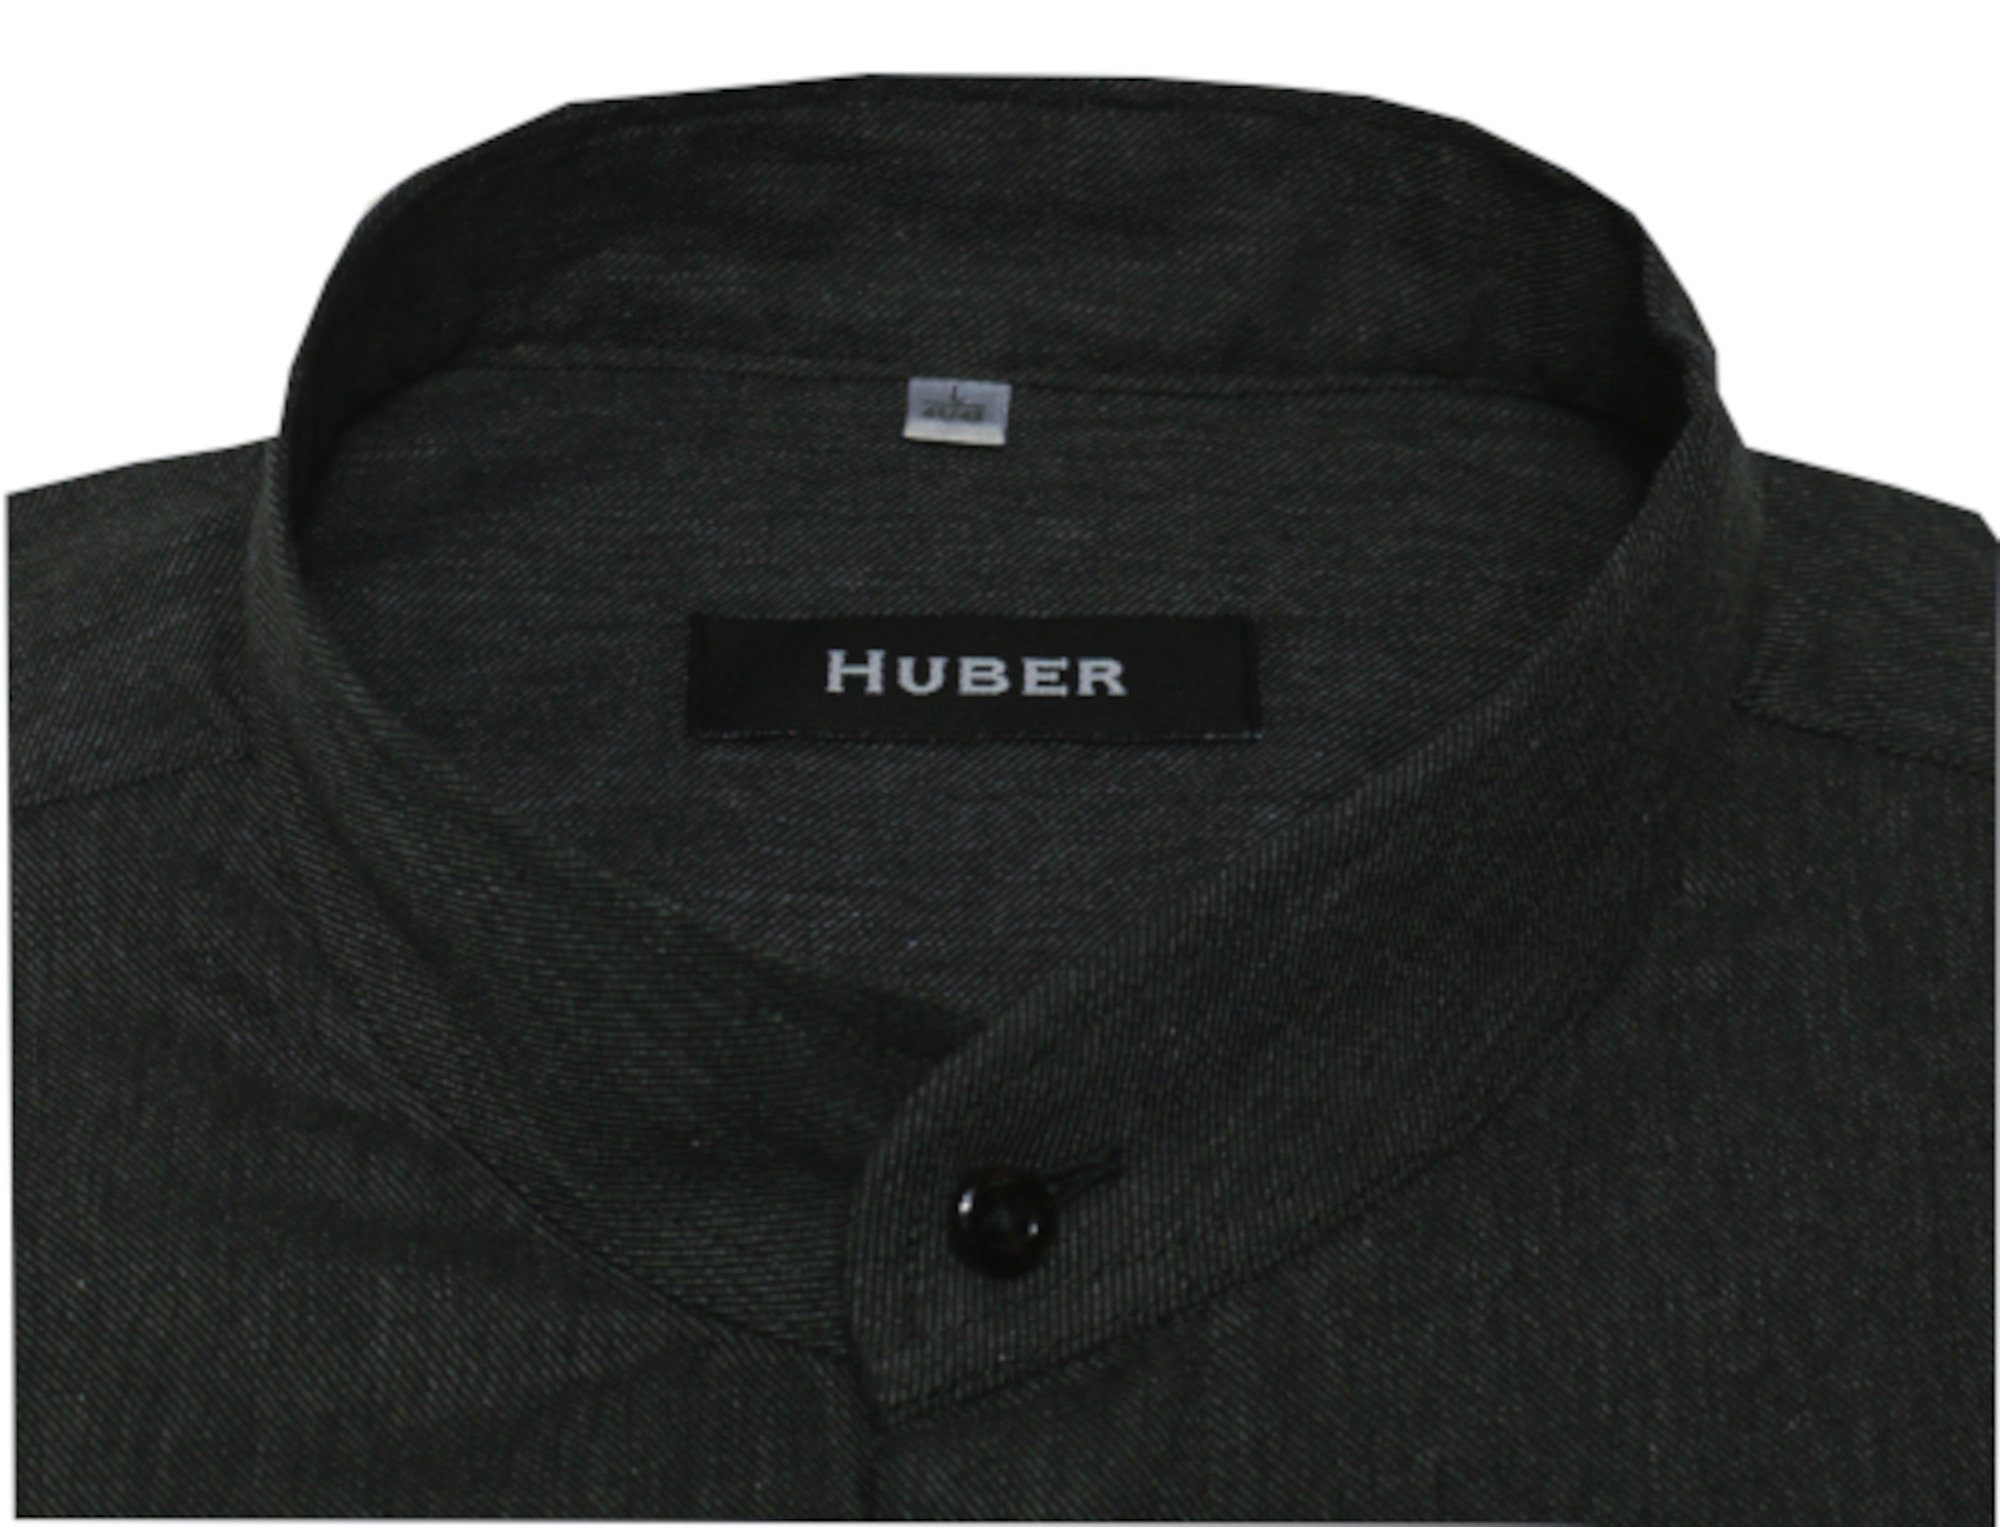 HU-0095 Made Schnitt, EU weicher Huber Langarmhemd Hemden Stehkragen, grau Regular Twill, in Fit-gerader